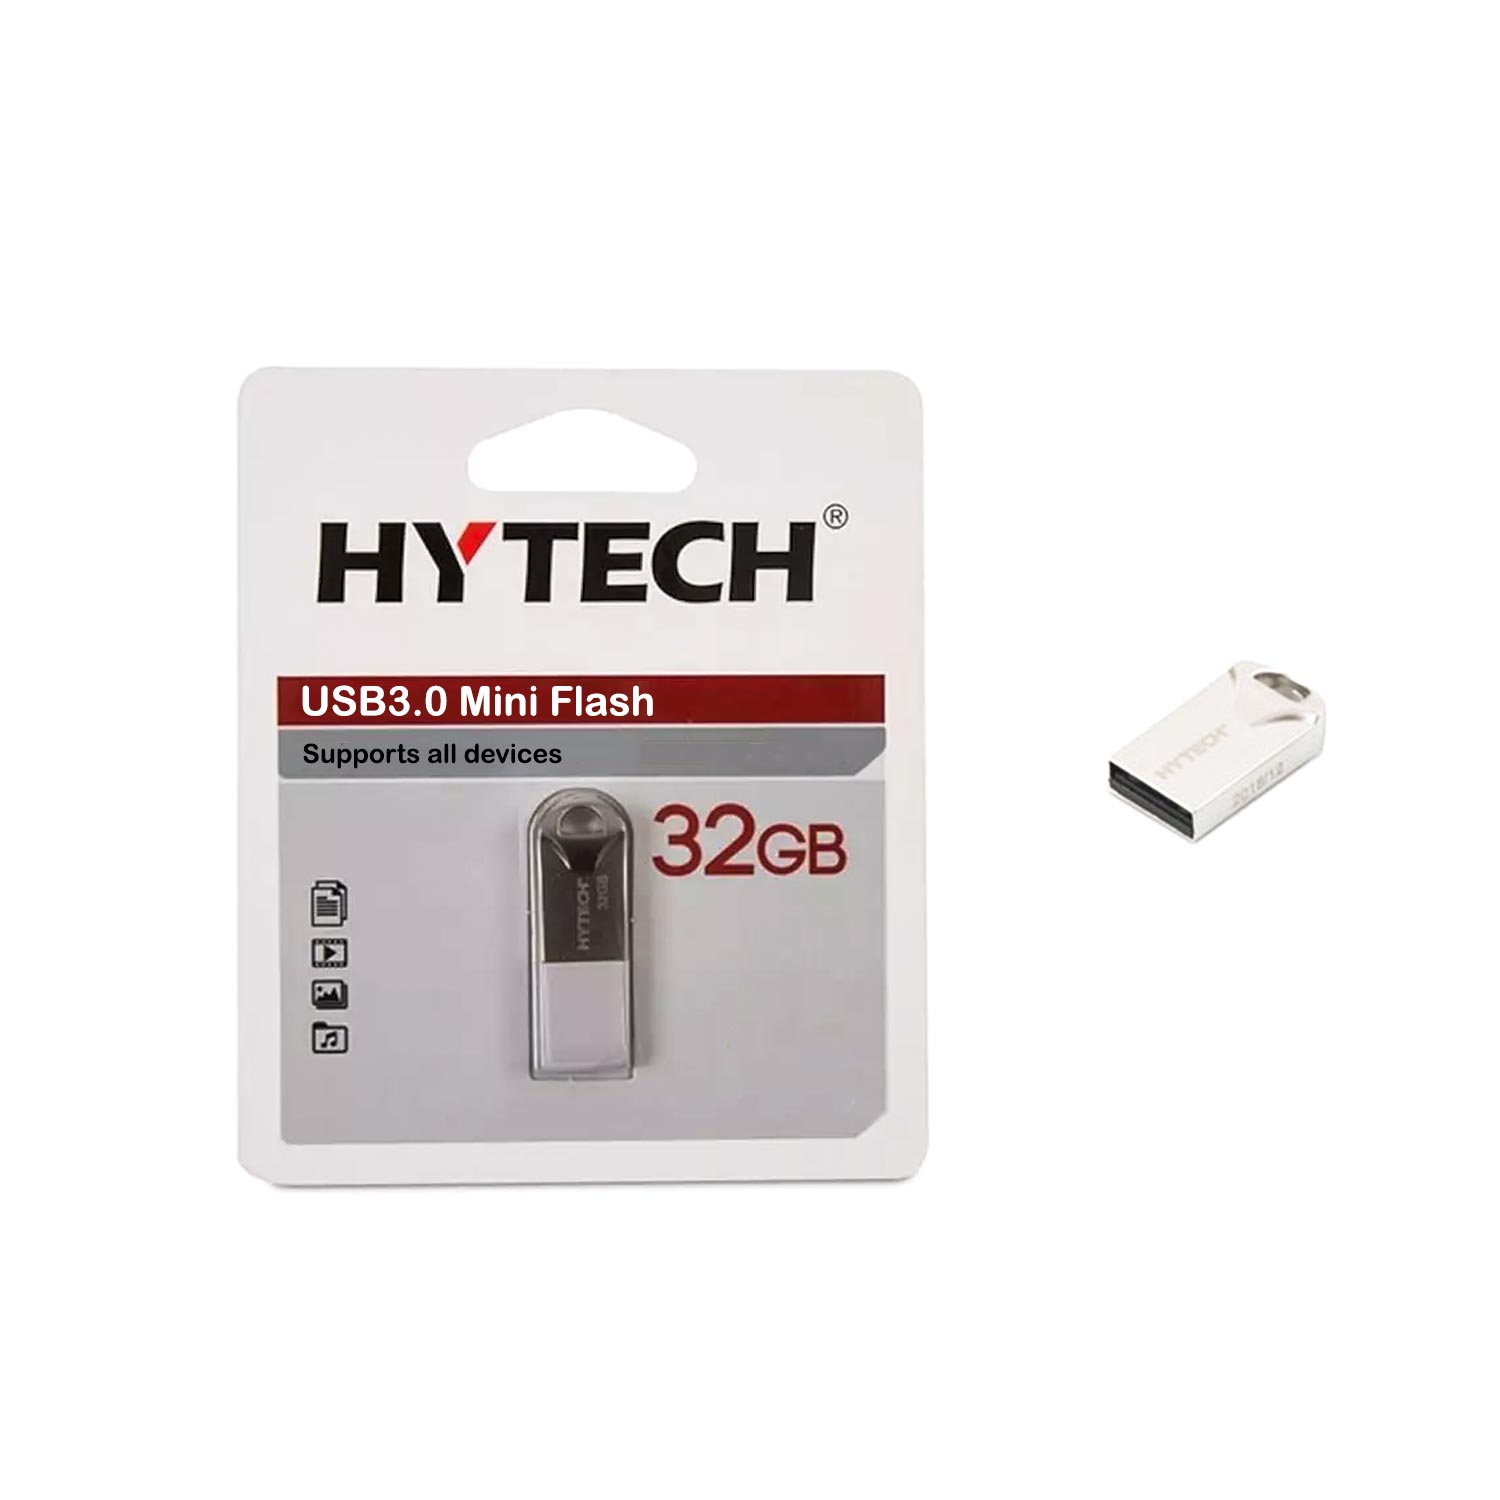 USB FLASH BELLEK 32GB 3.0 METAL MİNİ HYTECH